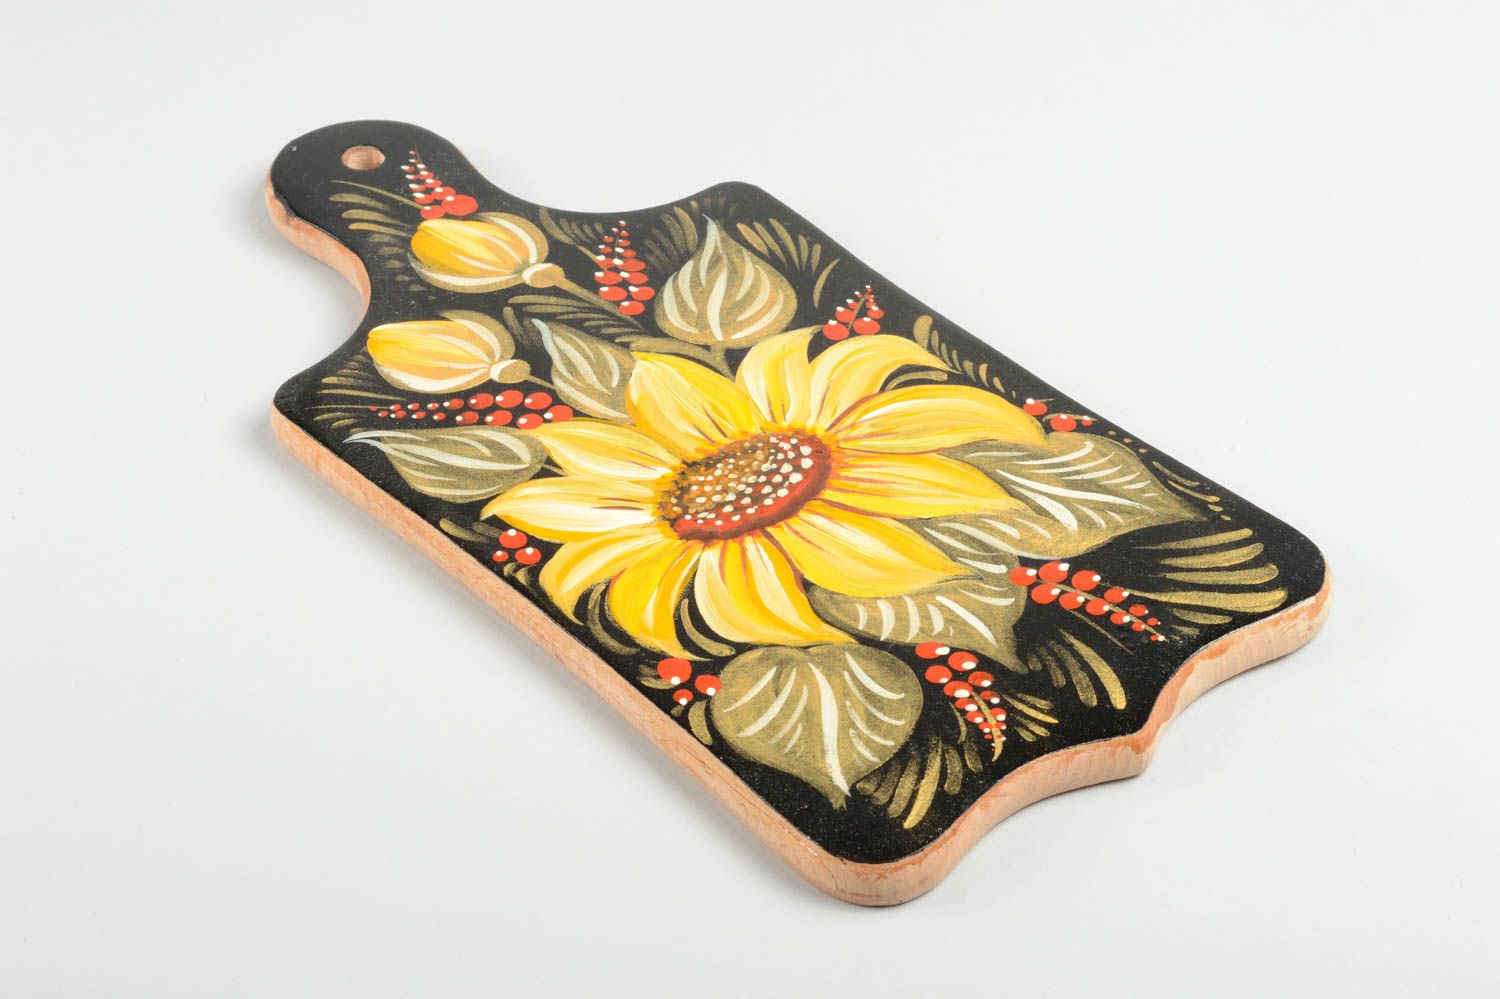 Unusual handmade cutting board designer accessories stylish decorative use only photo 3